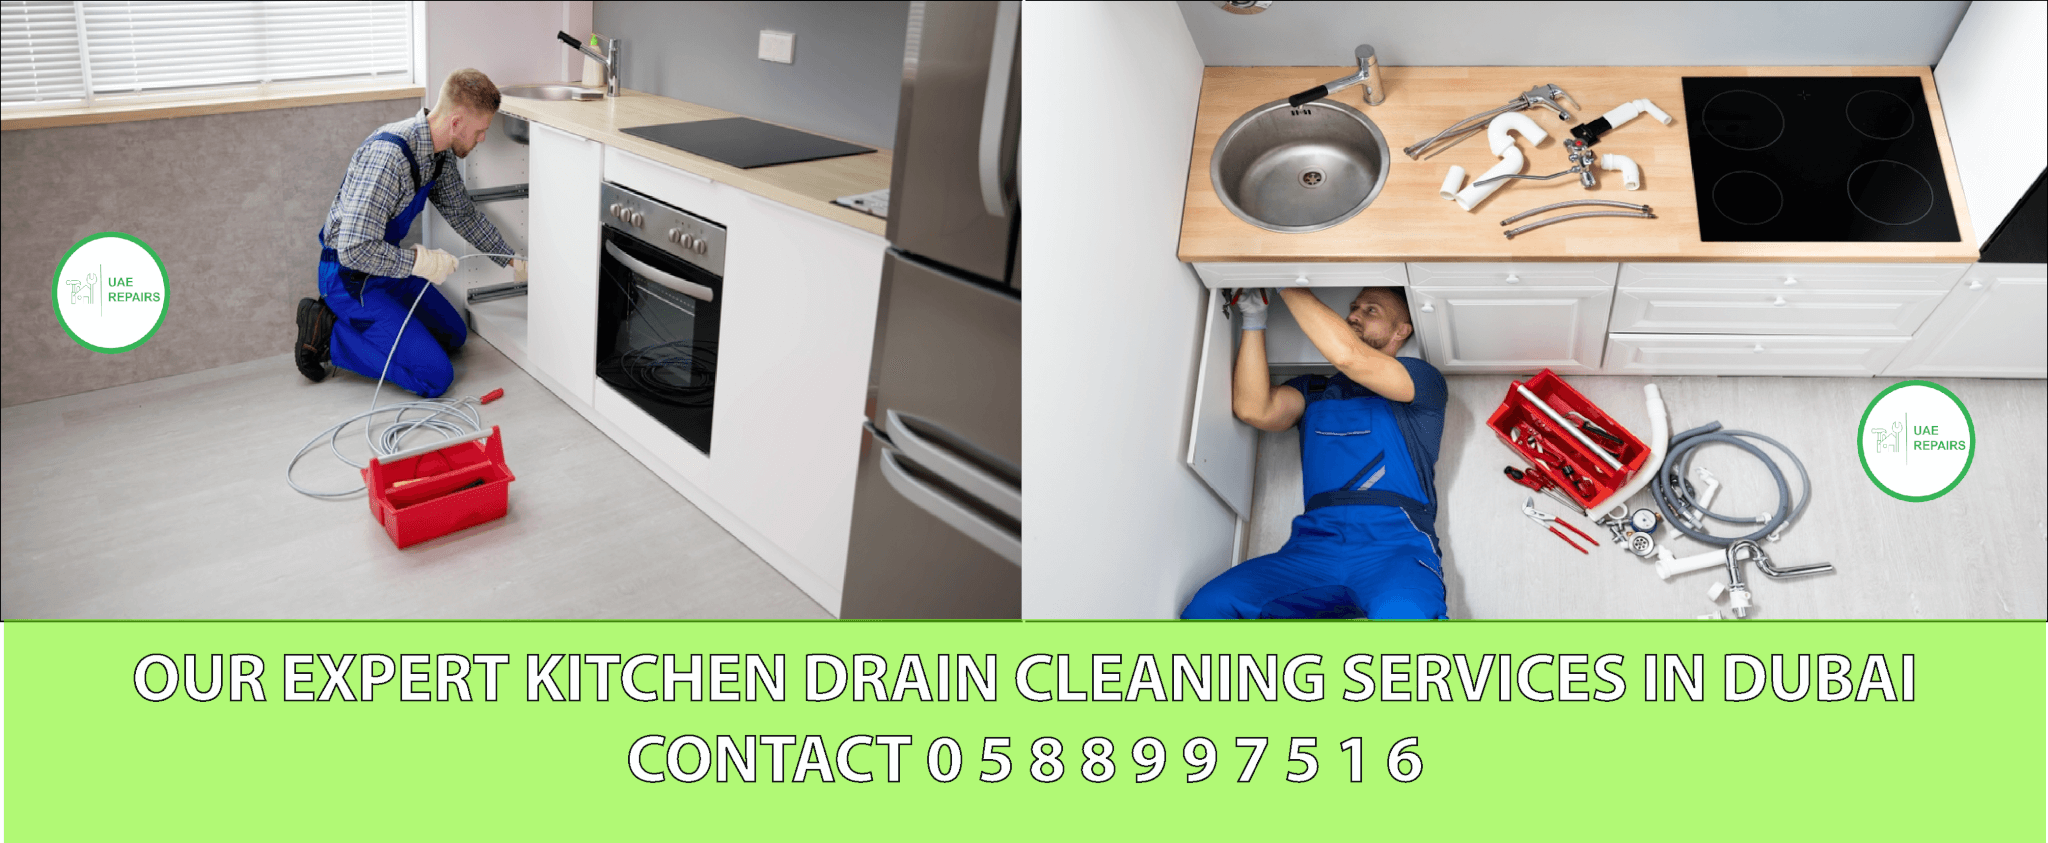 UAE REPAIRS EXPERT KTICHEN DRAIN CLEANING SERVICES 0588997516